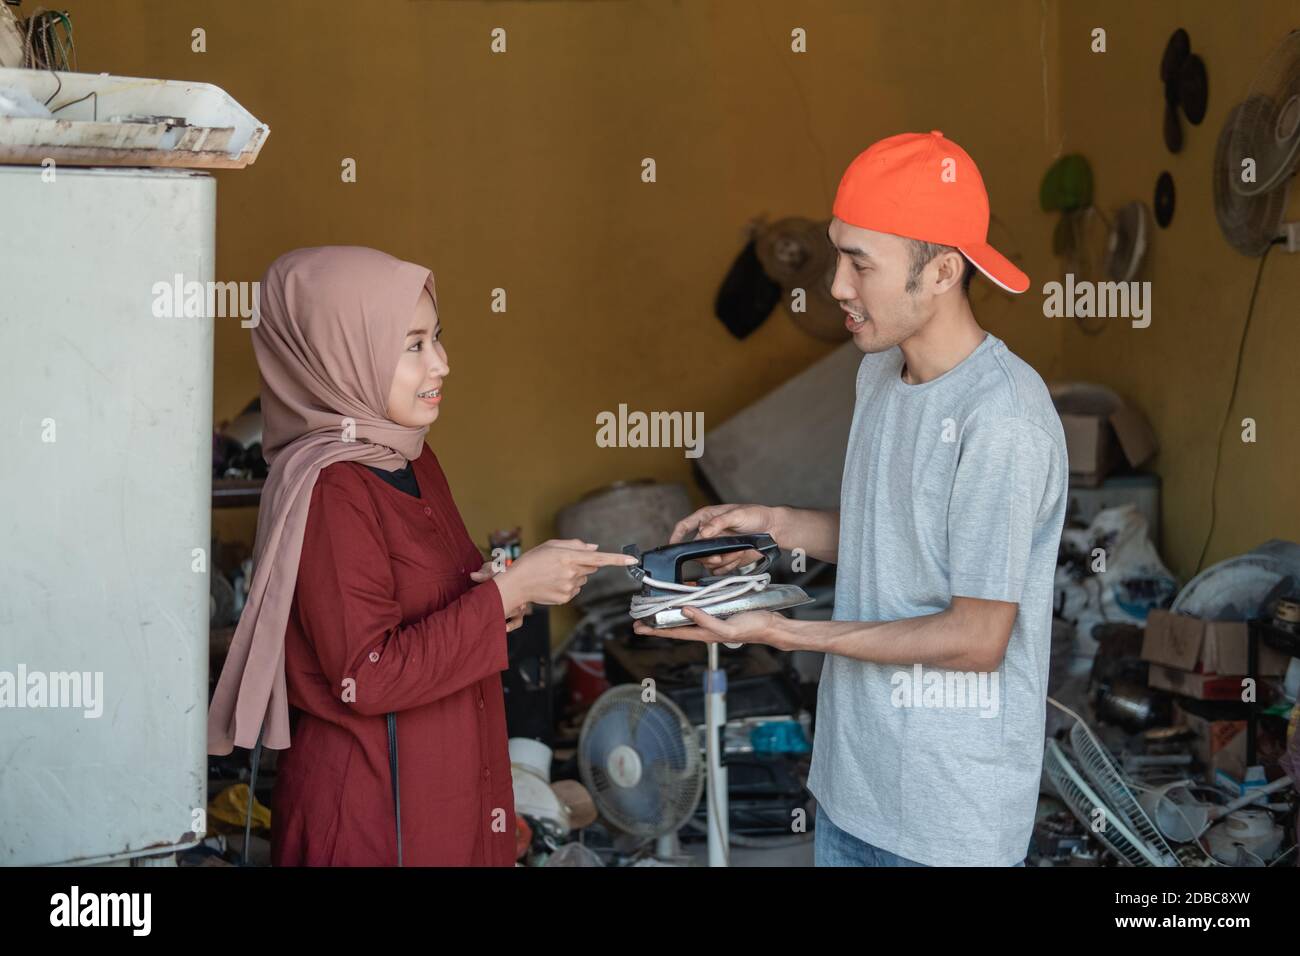 hijab woman takes a broken iron to an electronics repairman at an electronics repair shop Stock Photo